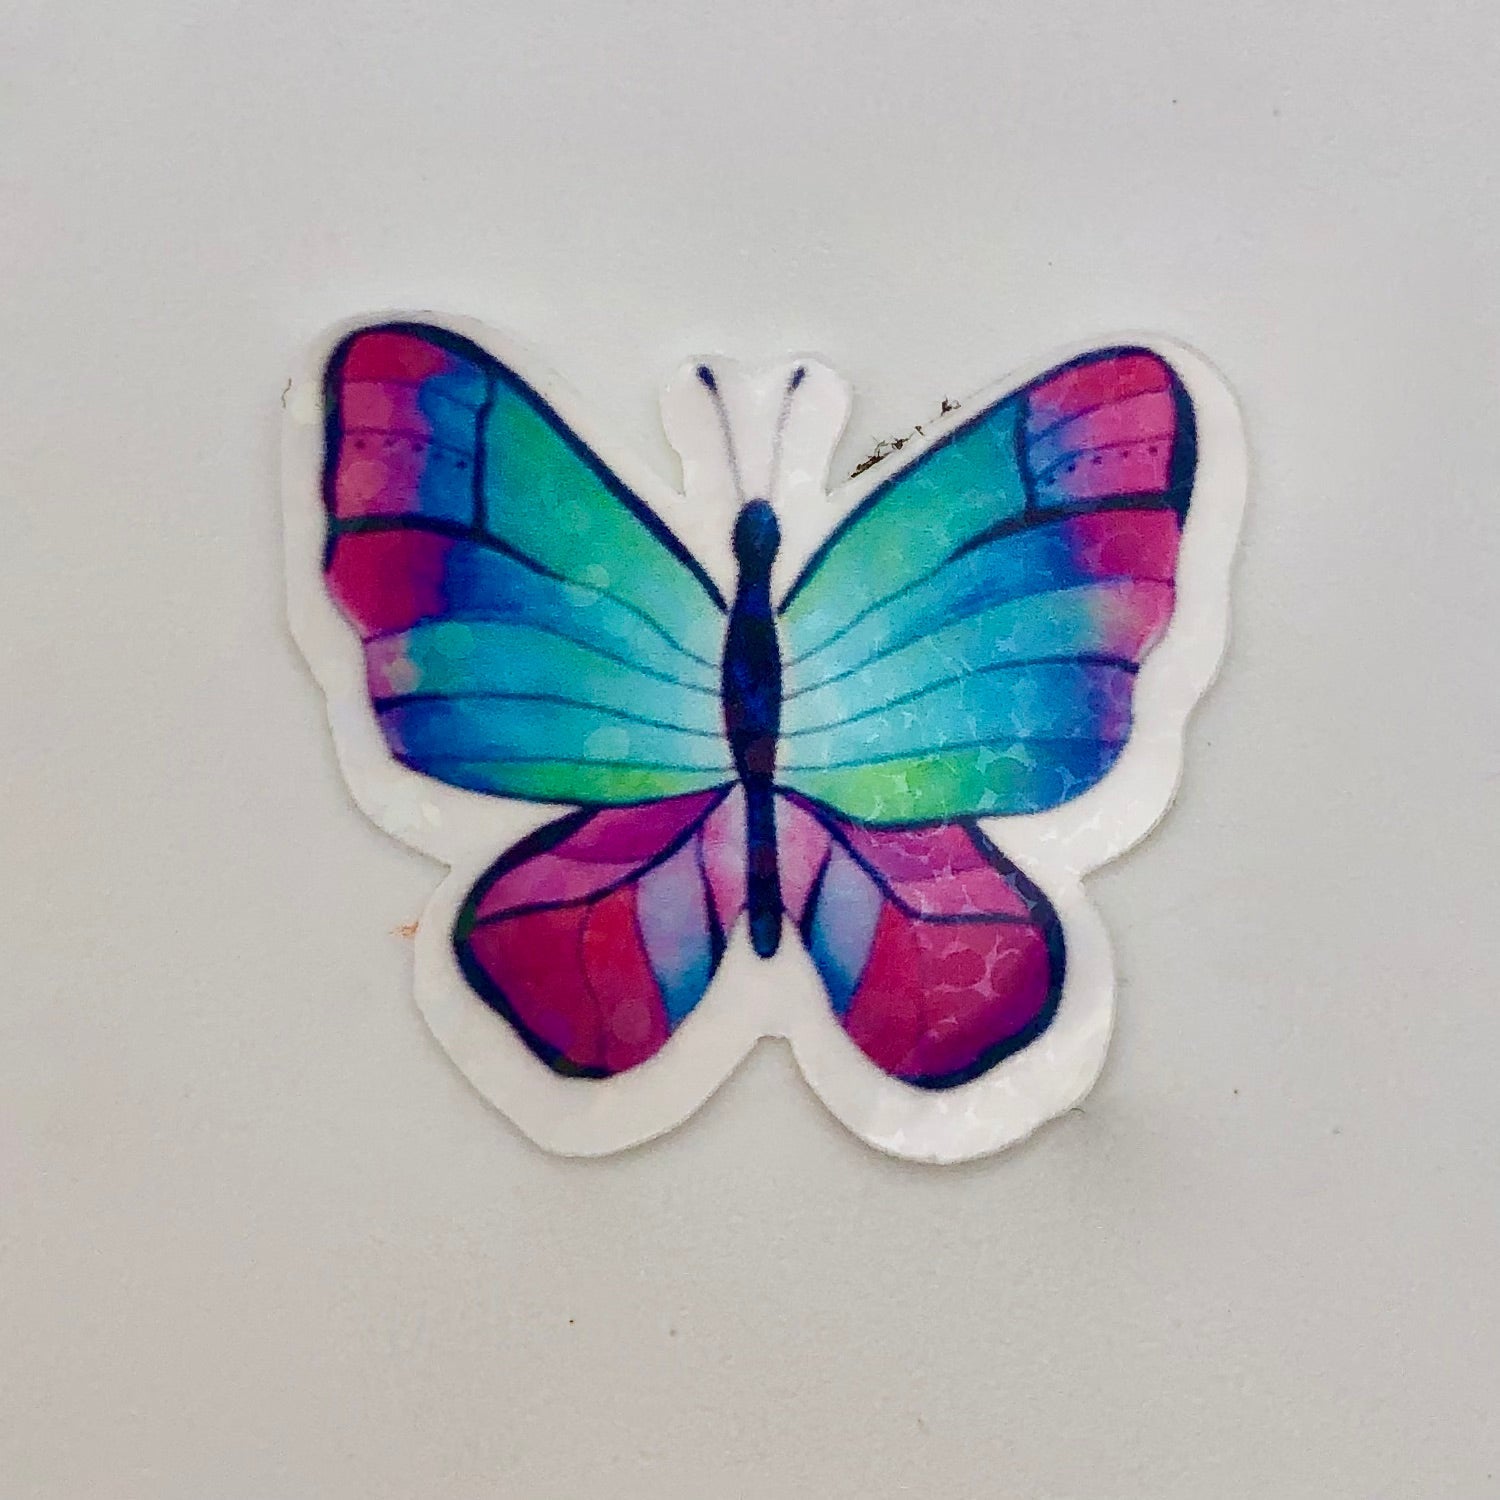 Stickiville Glittery Butterflies Stickers Skinny